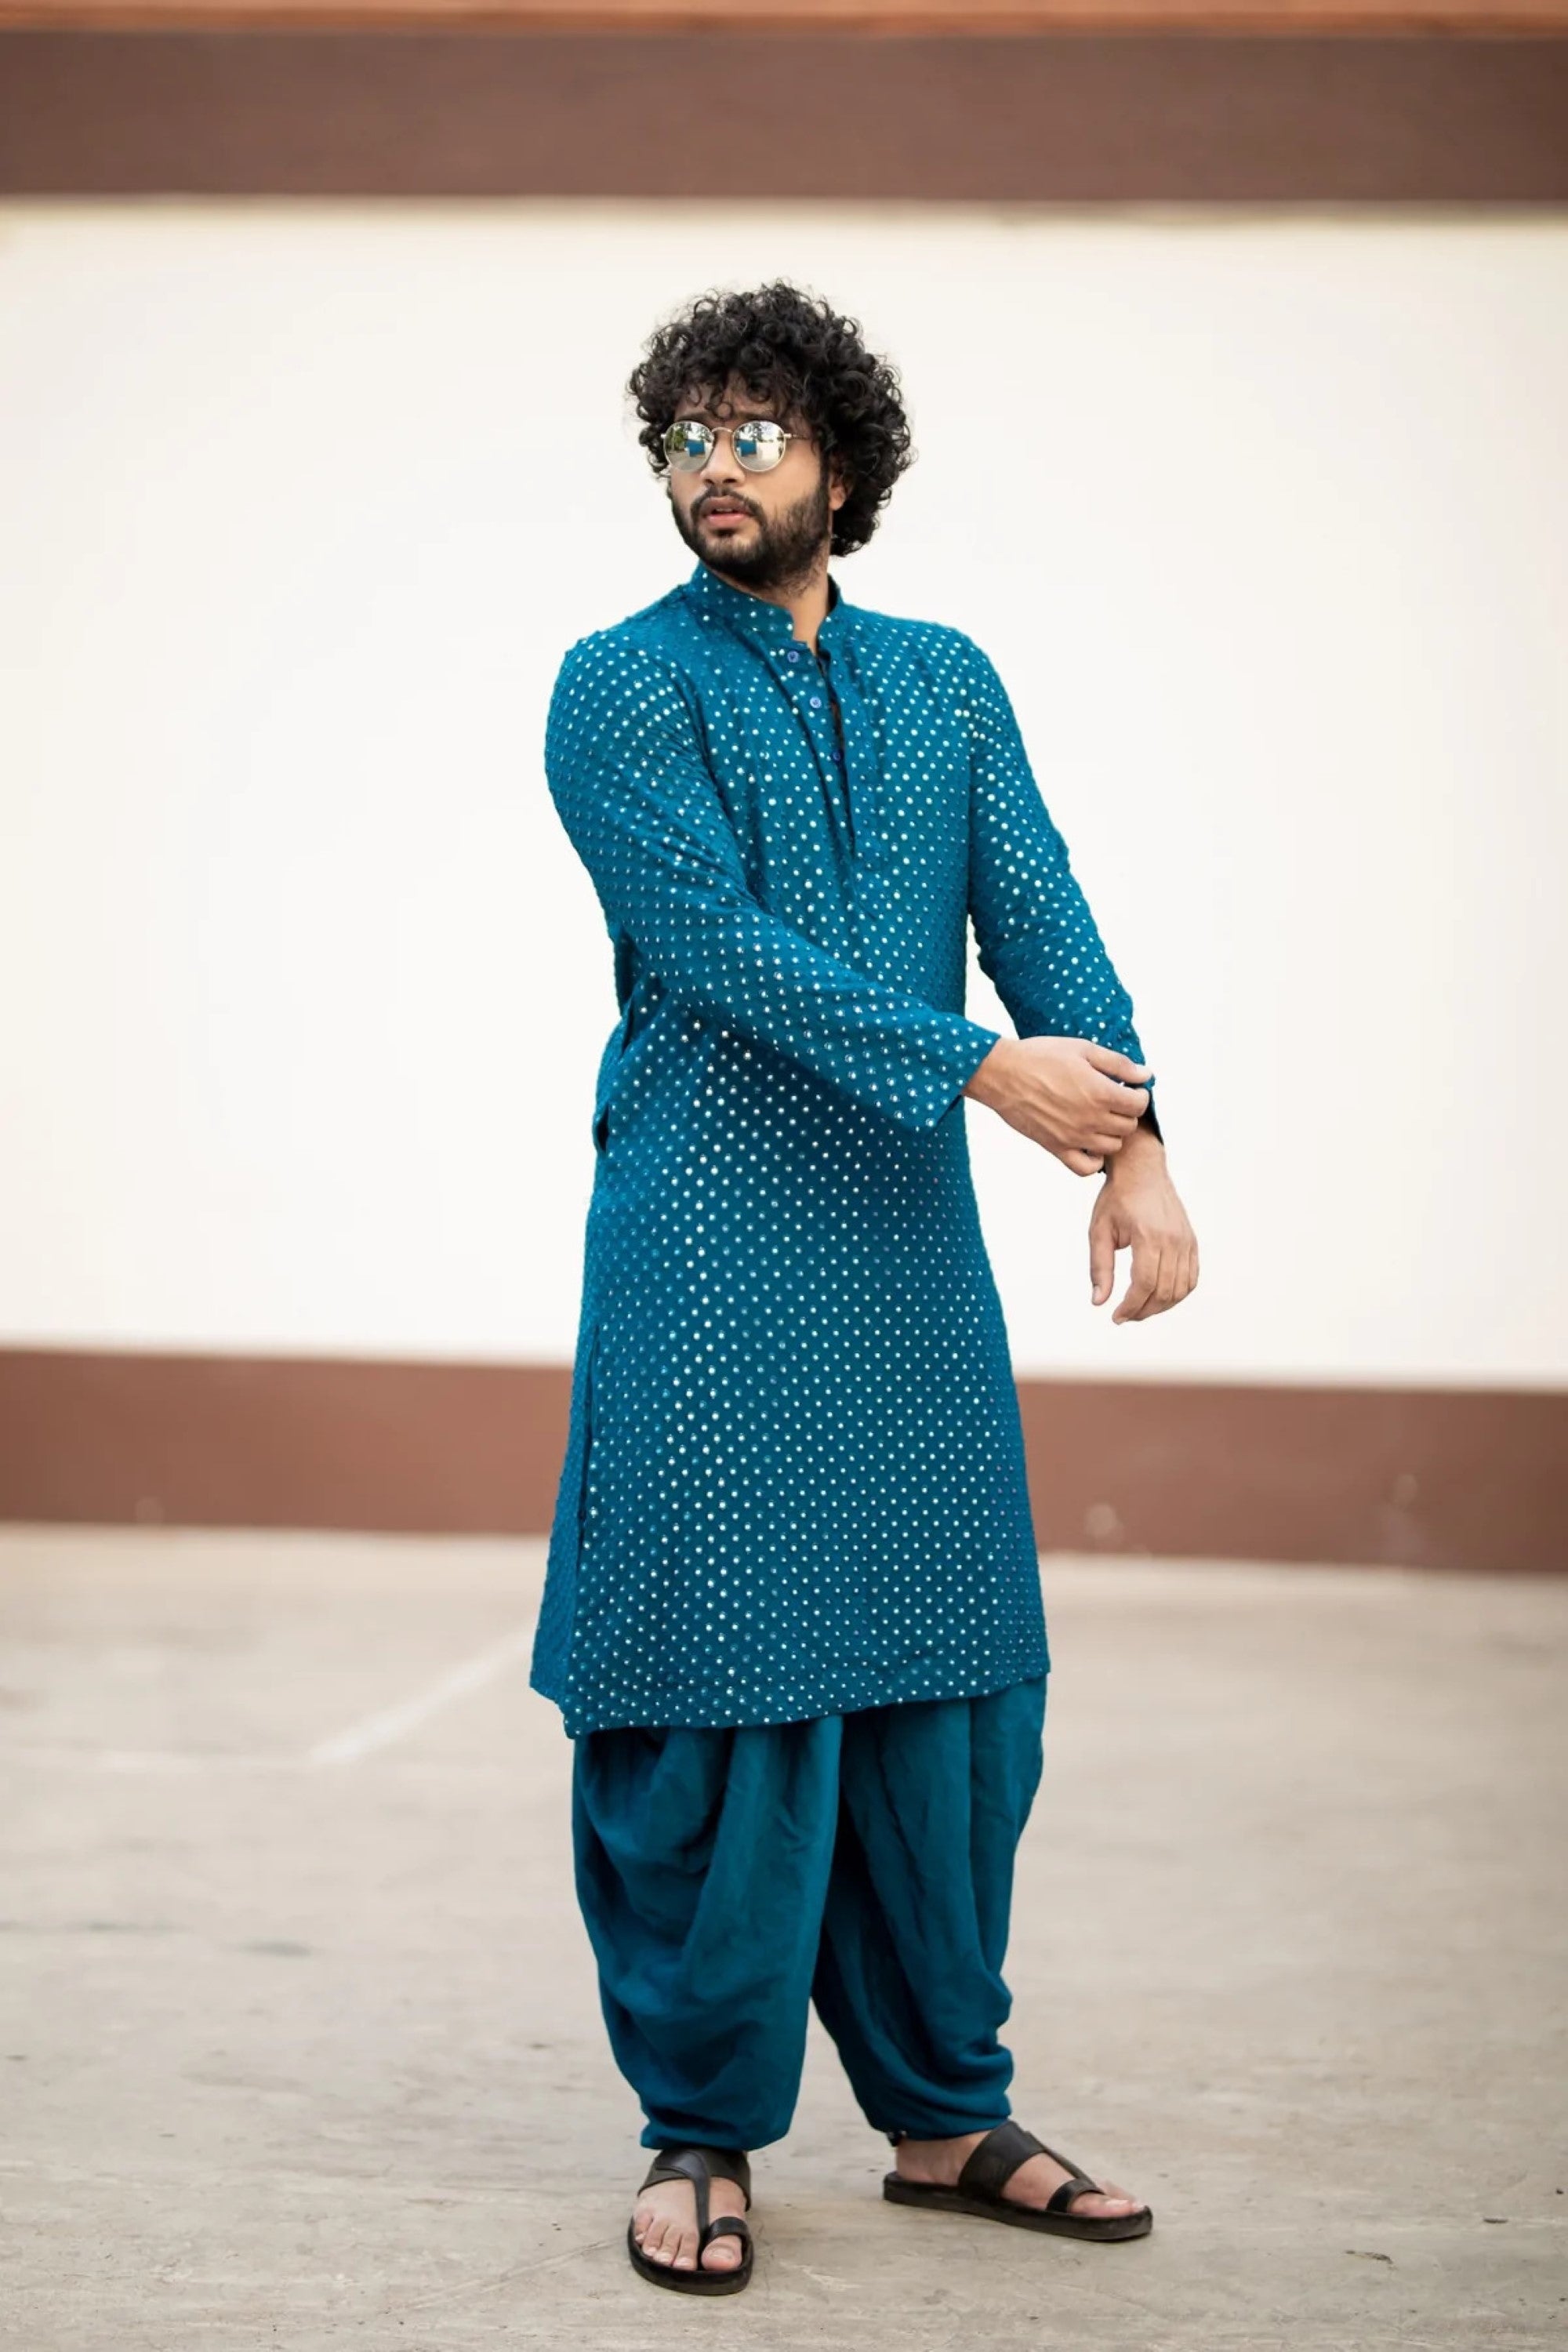 100% pure cotton Multi-colors Plain Patiala Salwar Pants for Women & Girls  | eBay